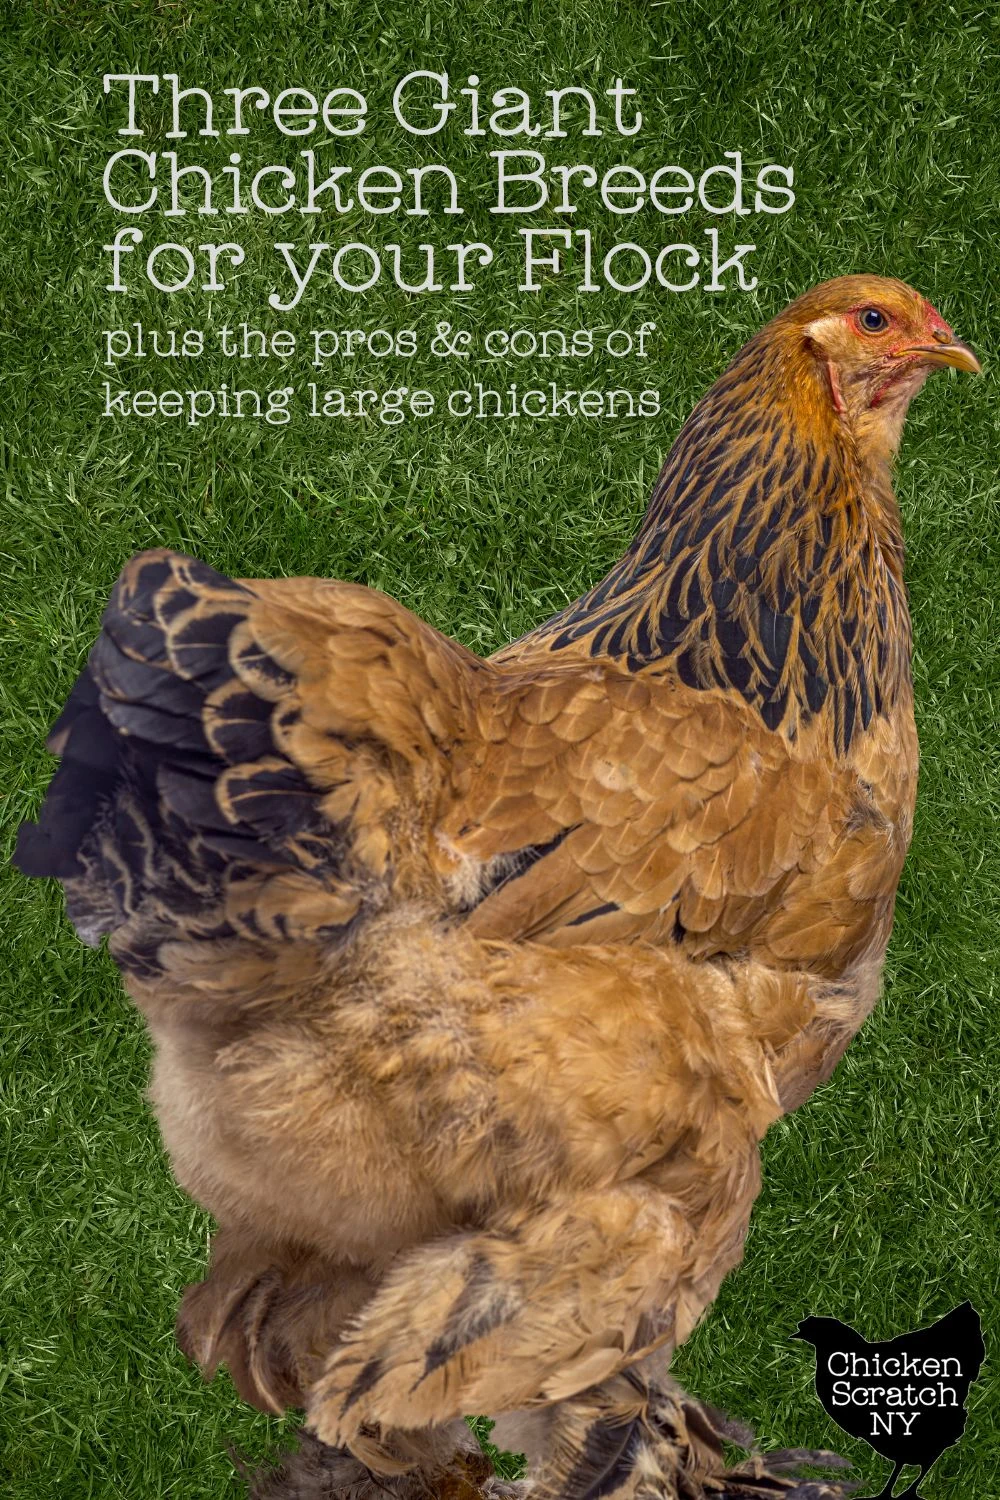 Silver Laced Brahma Chicken Scratching Ground Stock Photo